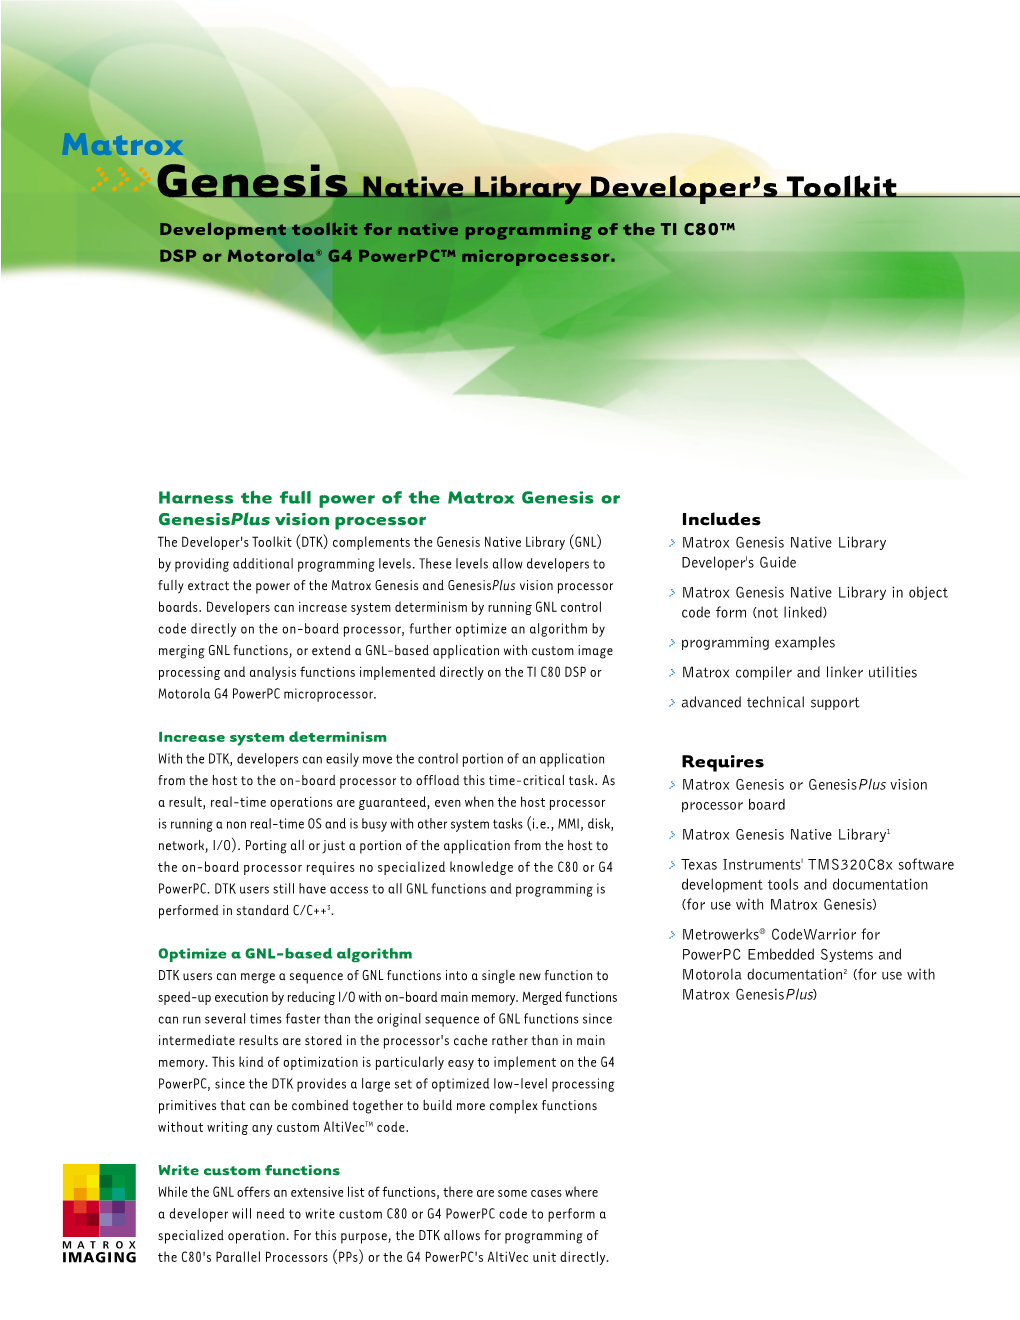 Matrox Genesis Native Library Developer’S Toolkit Development Toolkit for Native Programming of the TI C80™ DSP Or Motorola® G4 Powerpc™ Microprocessor